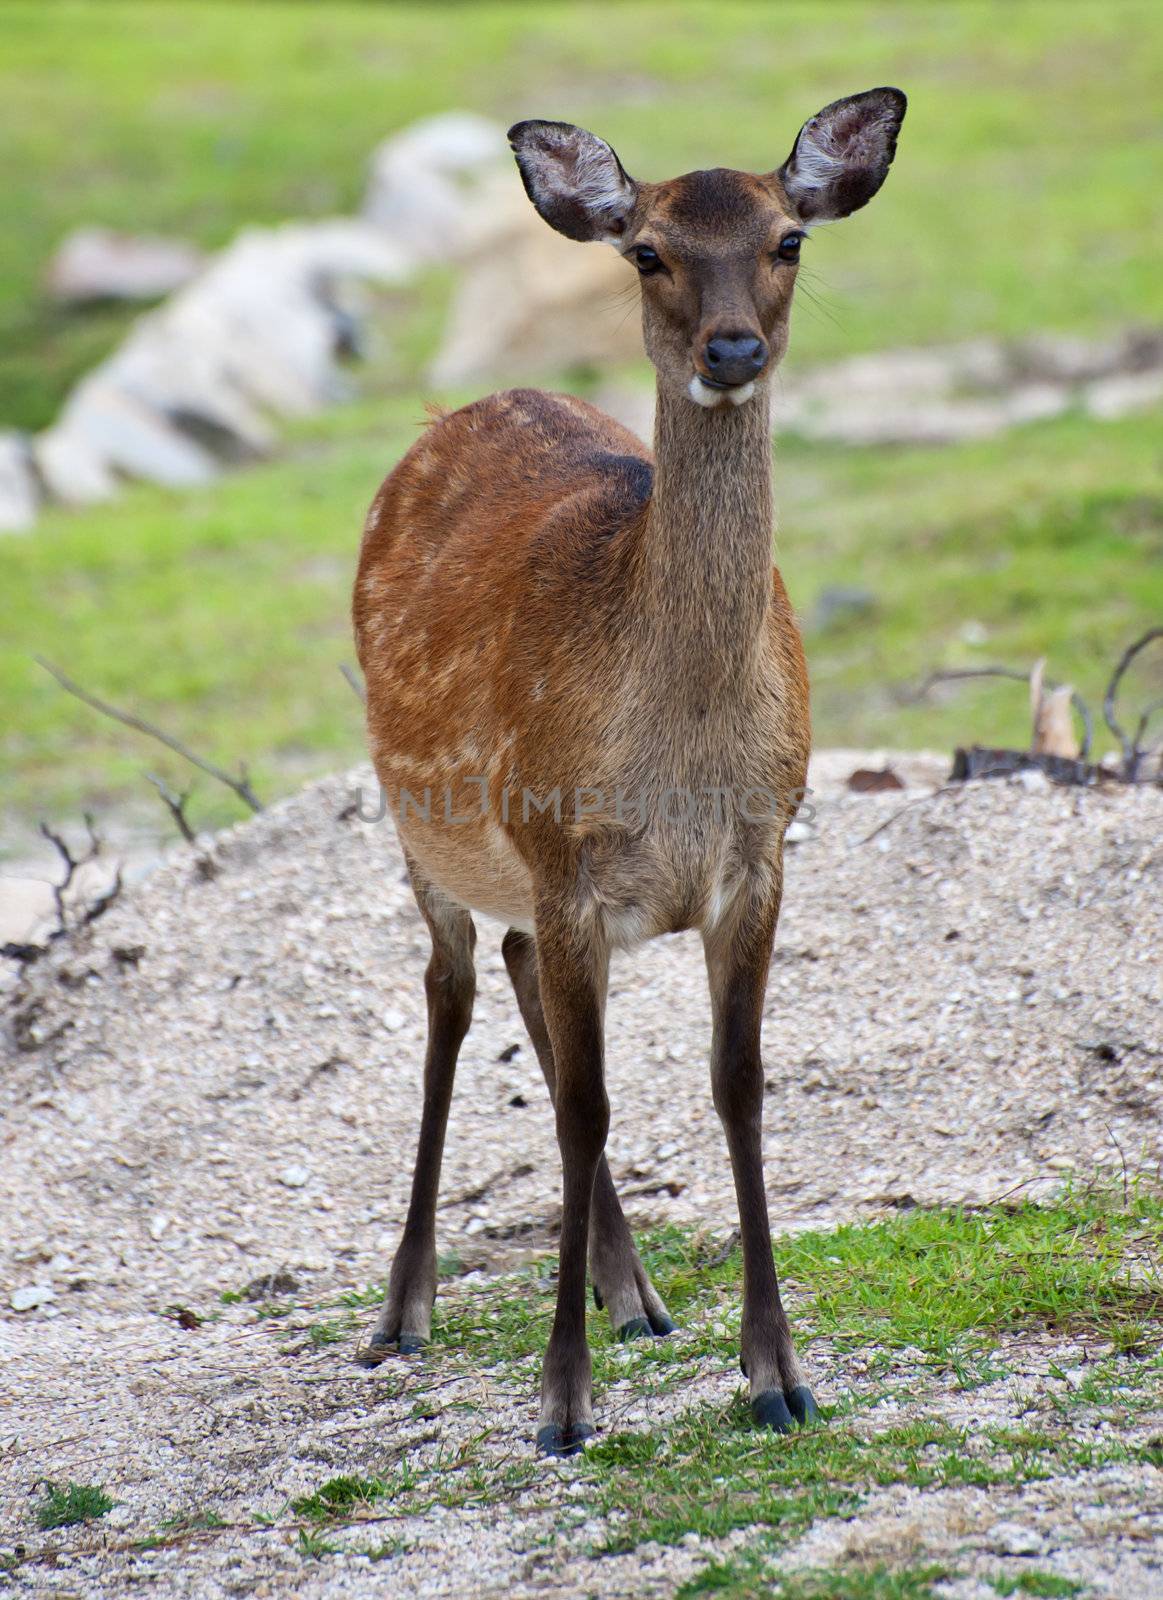 Nara Deer by fyletto